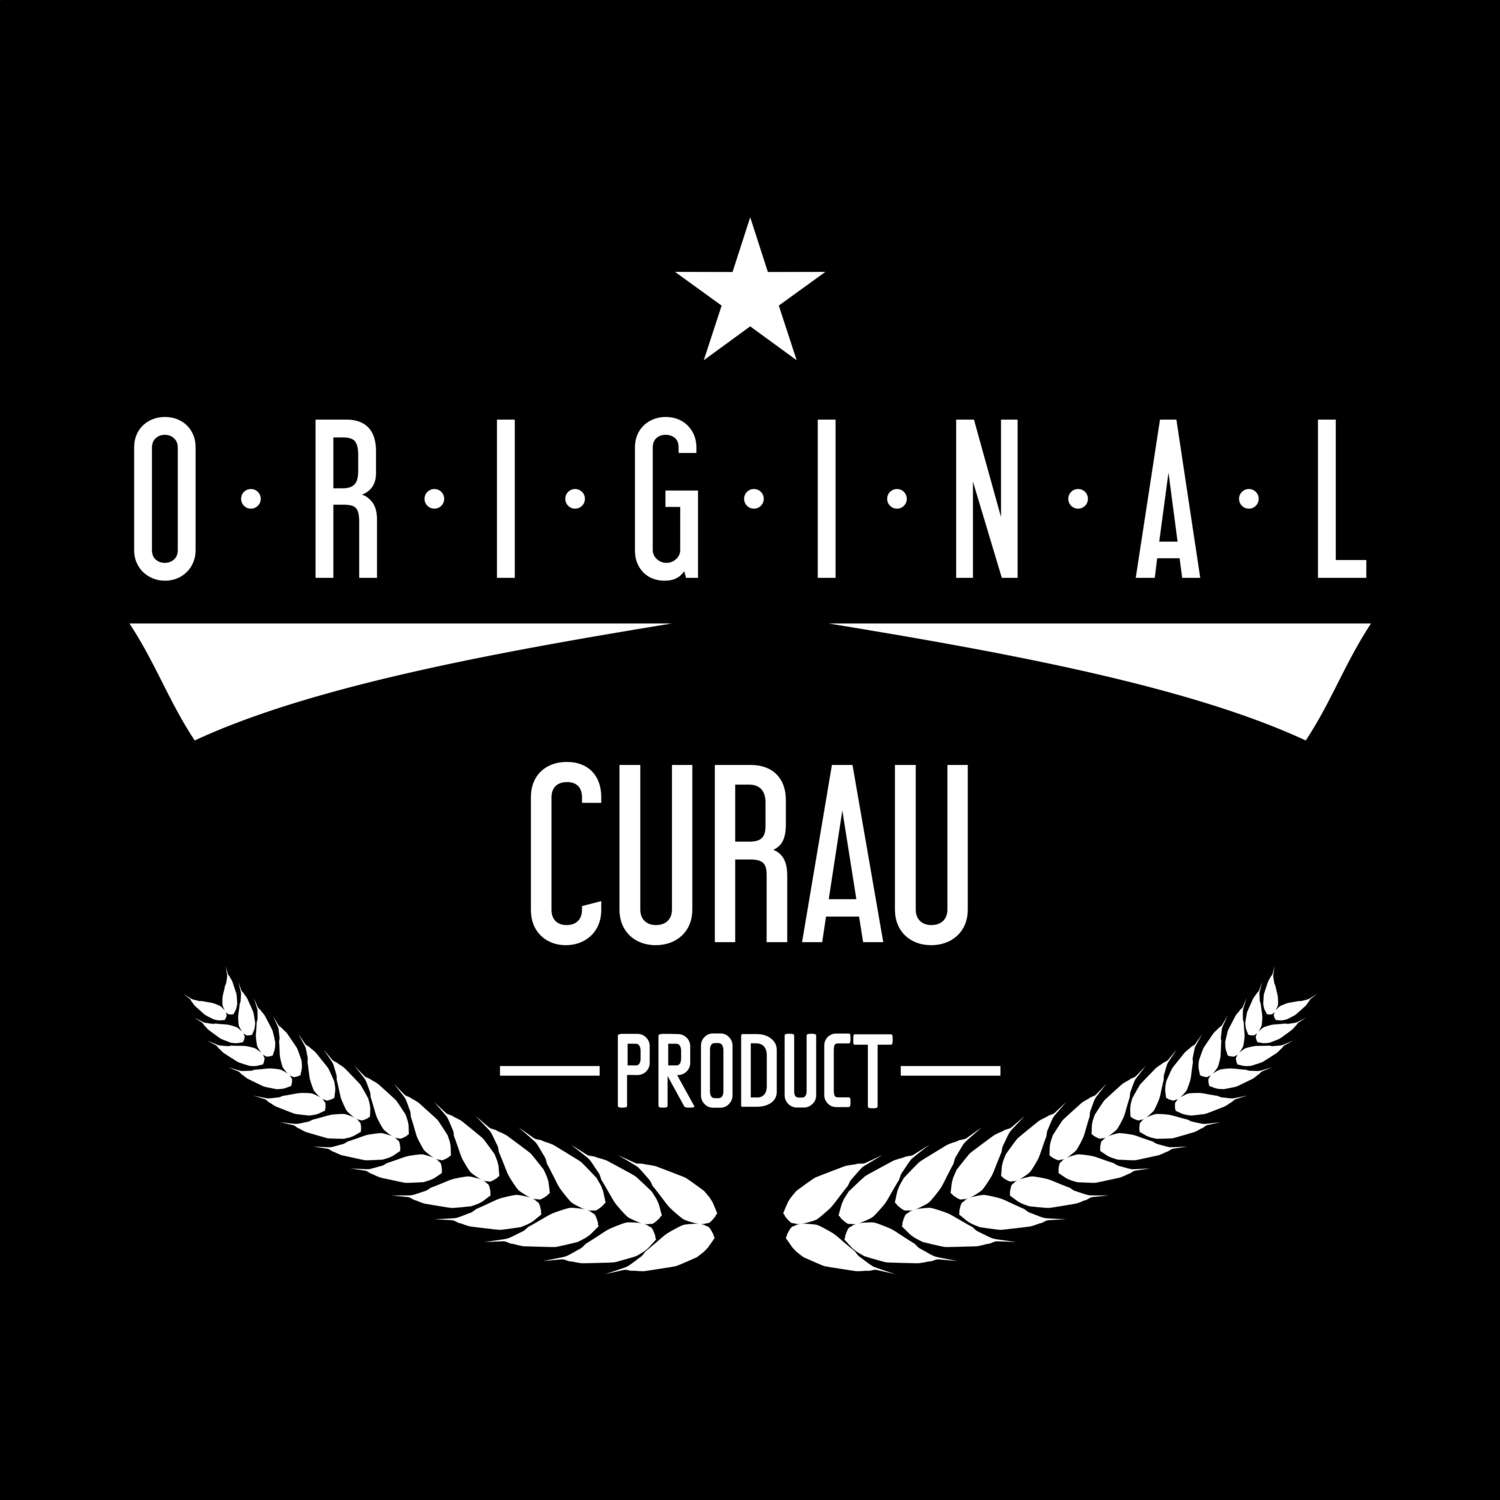 Curau T-Shirt »Original Product«